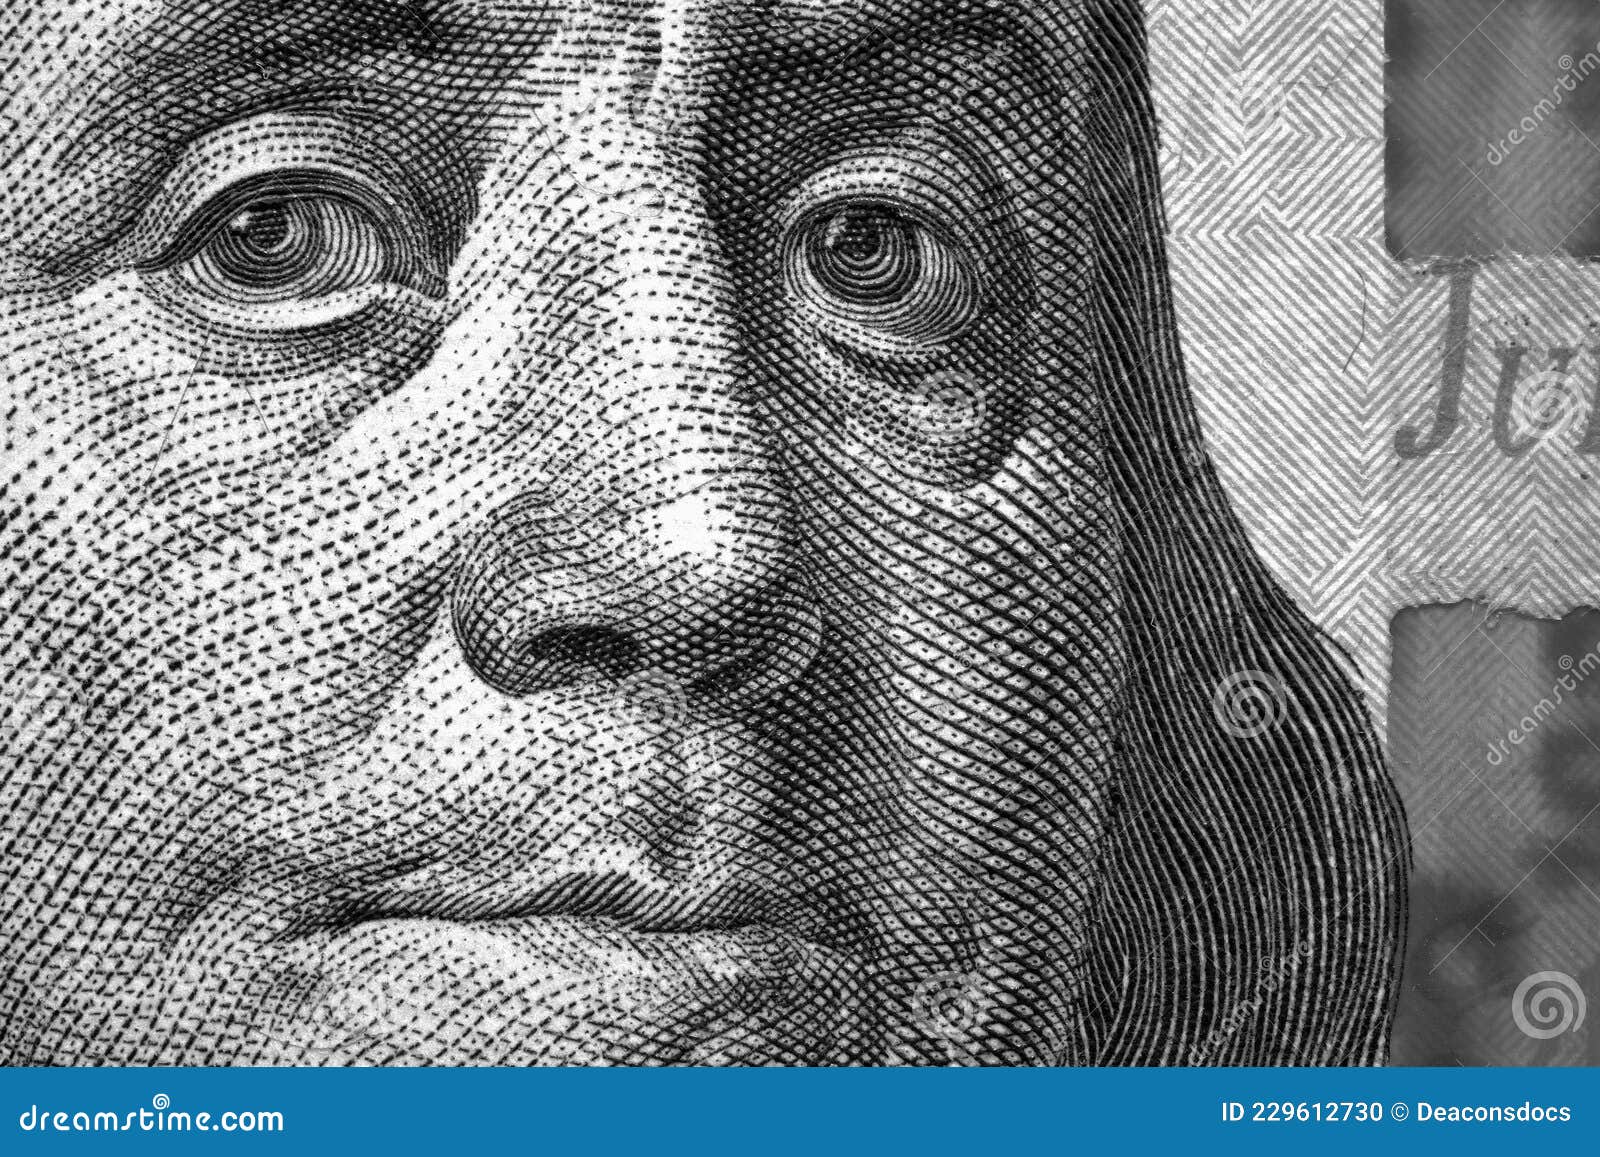 Download wallpapers Eye Benjamin Franklin dollar bill US dollars  american dollars banknotes for desktop free Pictures for desktop free